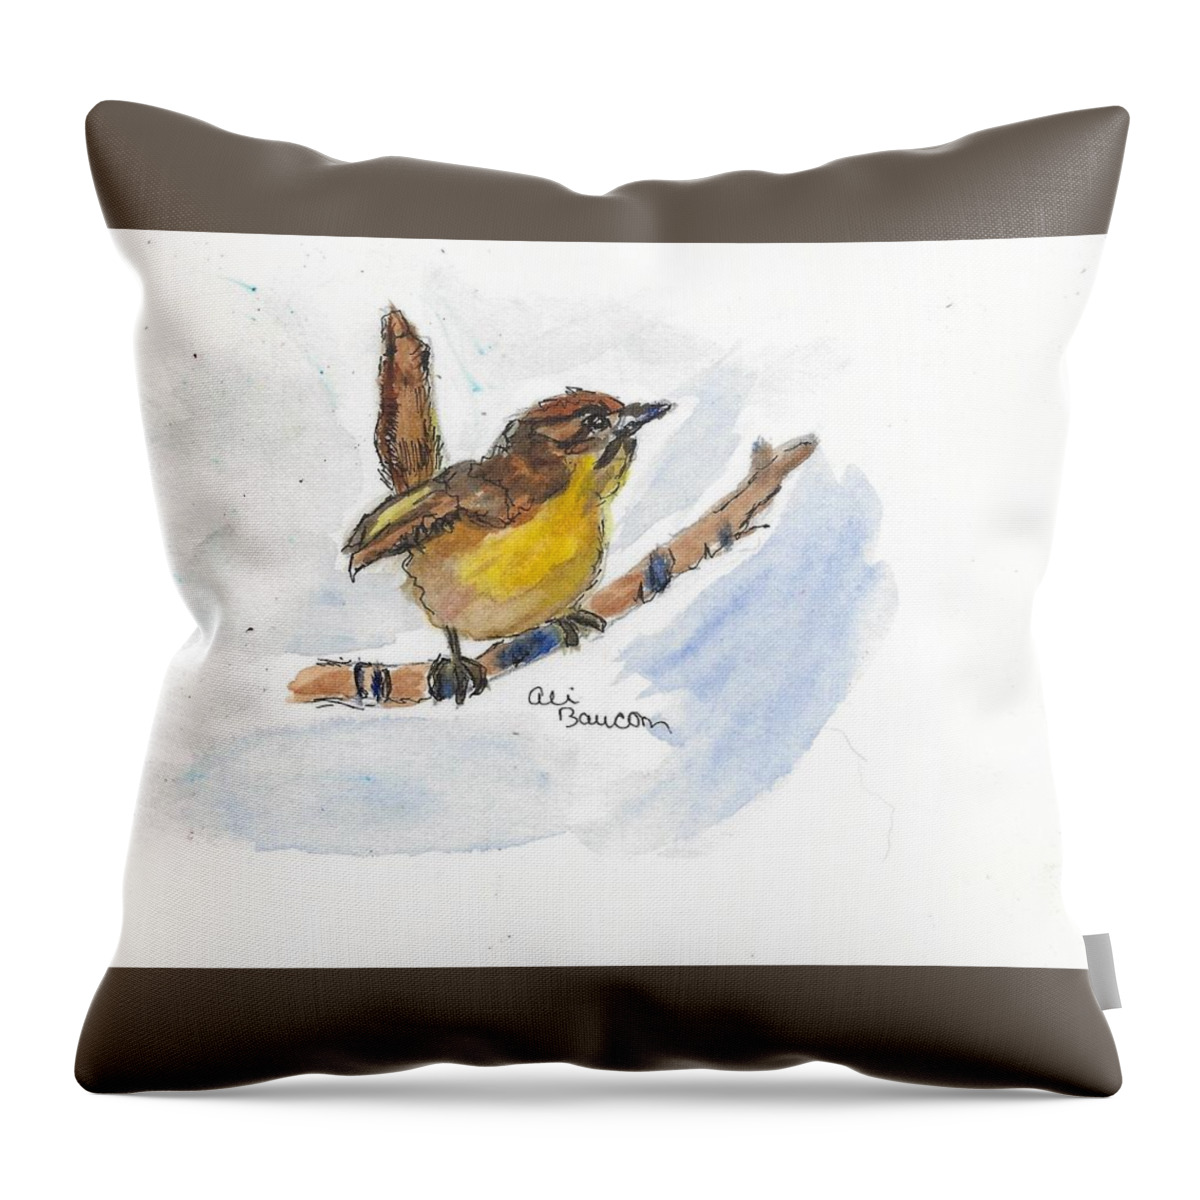 Bird Throw Pillow featuring the mixed media Reginald by Ali Baucom